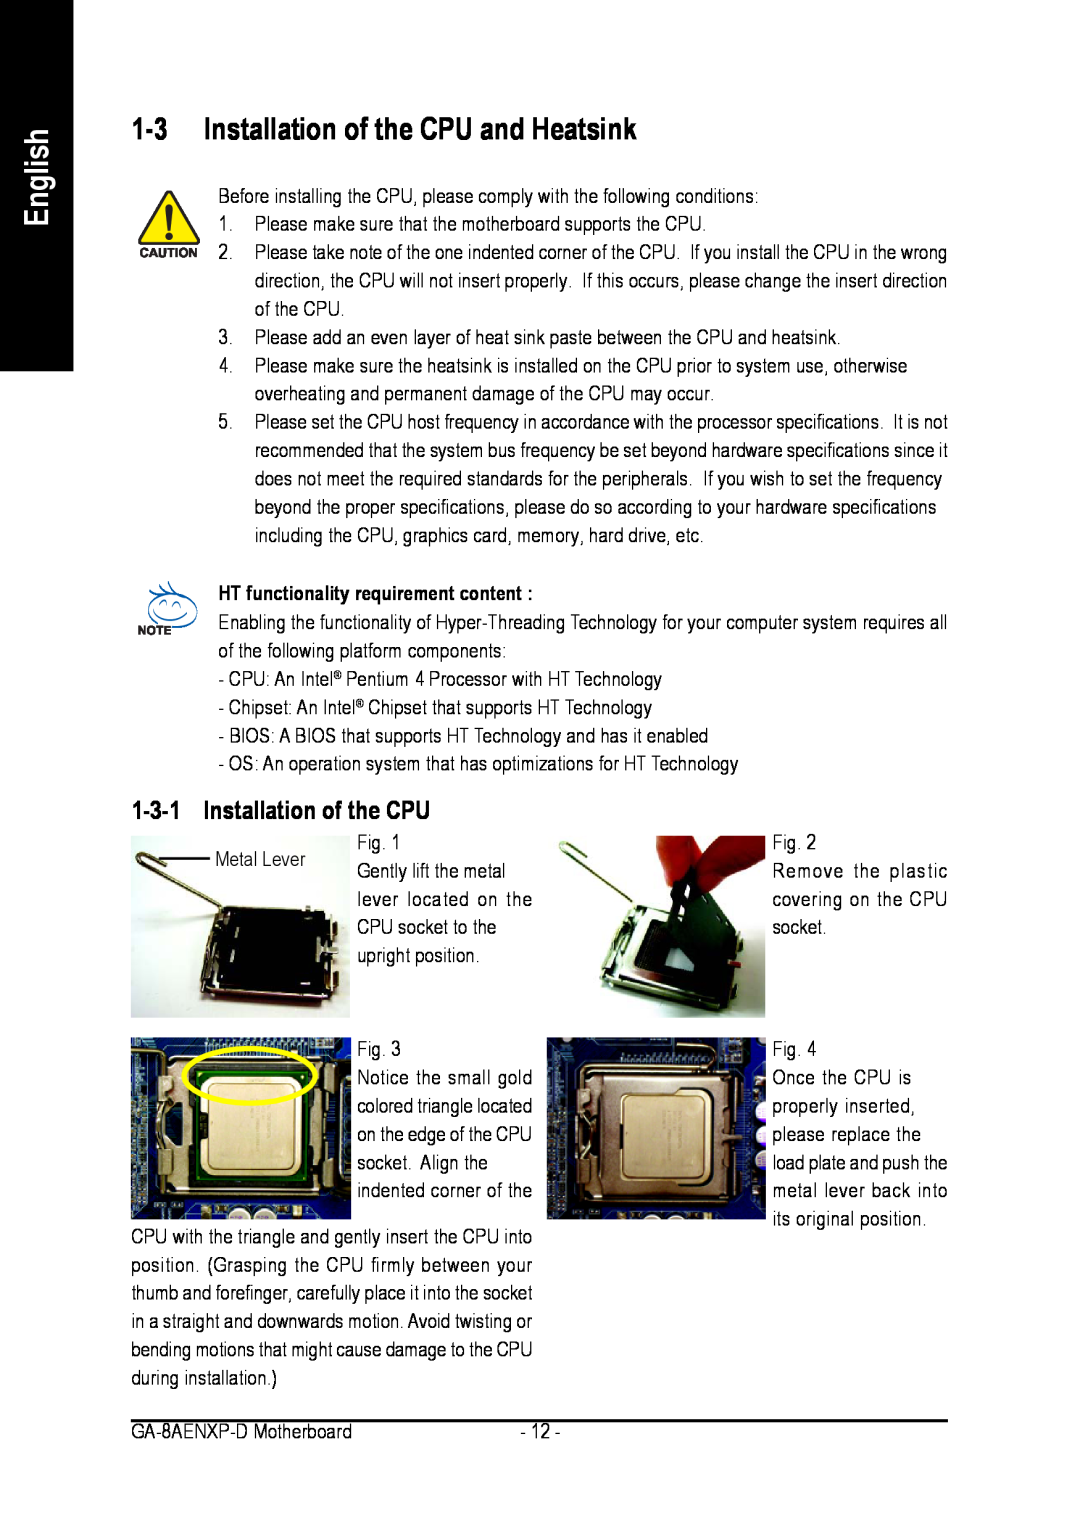 Gigabyte GA-8AENXP-D user manual Installation of the CPU and Heatsink, English 